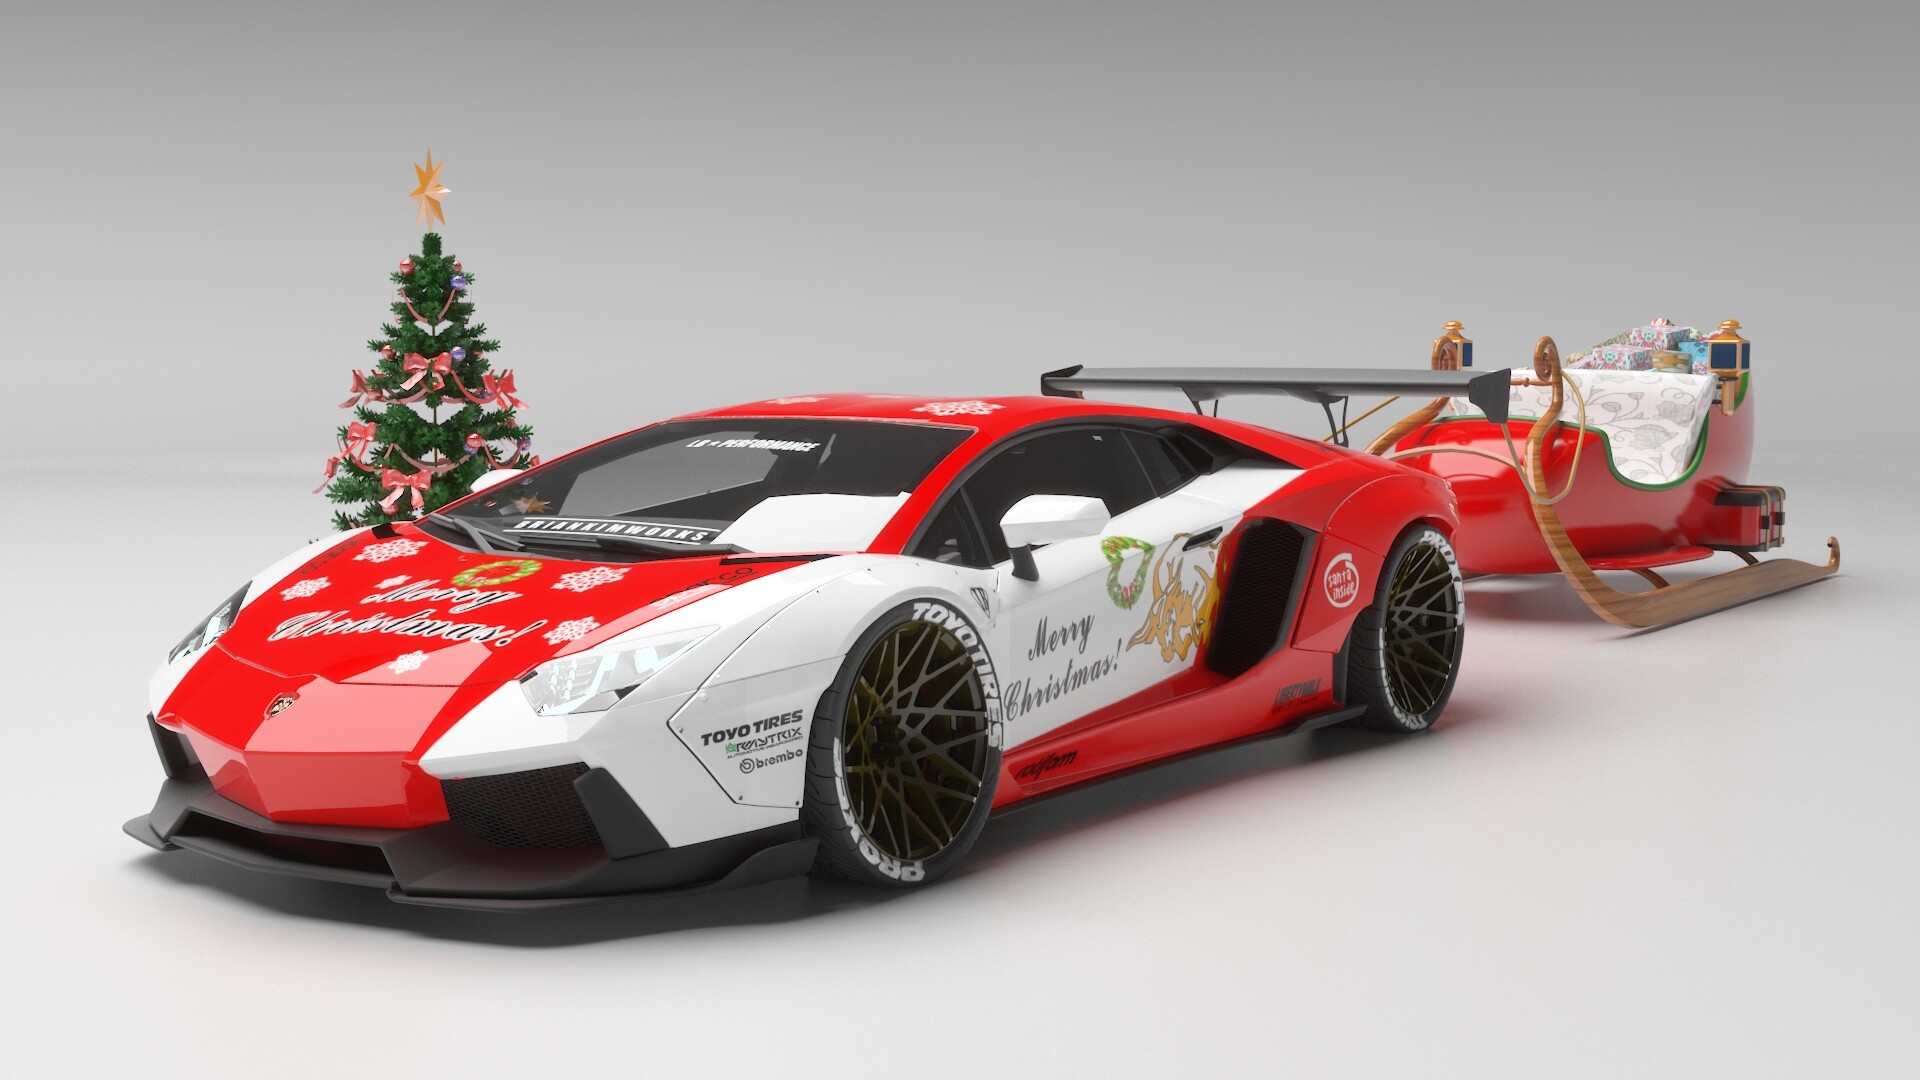 Lamborghini Aventador Christmas Concept, Brian Kim